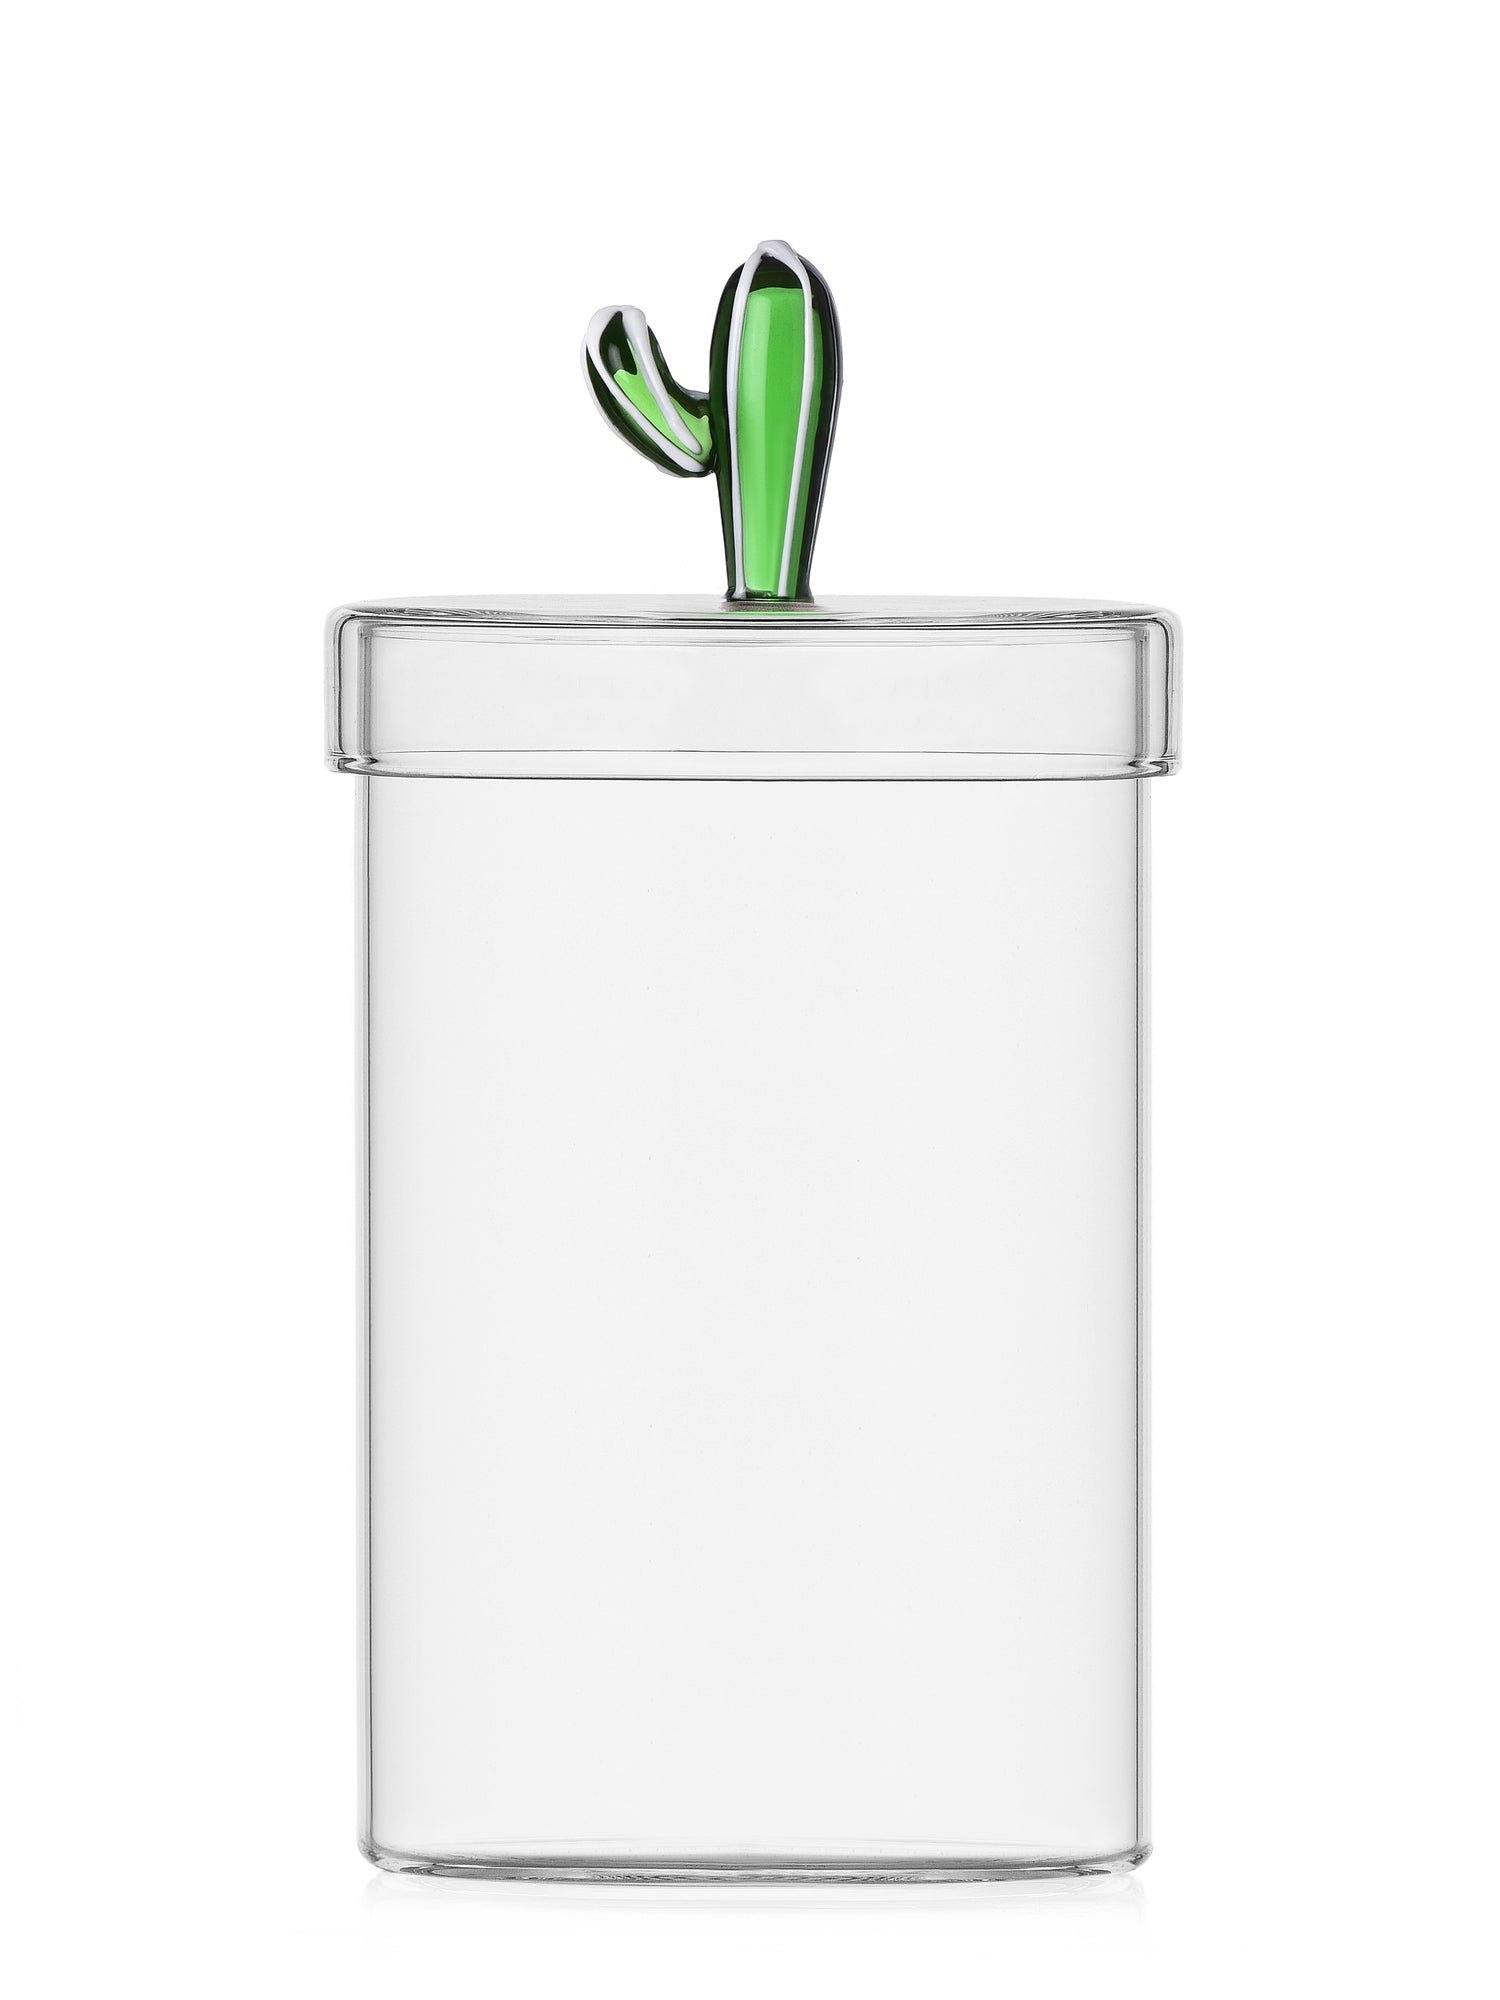 Green Cactus Box - DESERT PLANTS